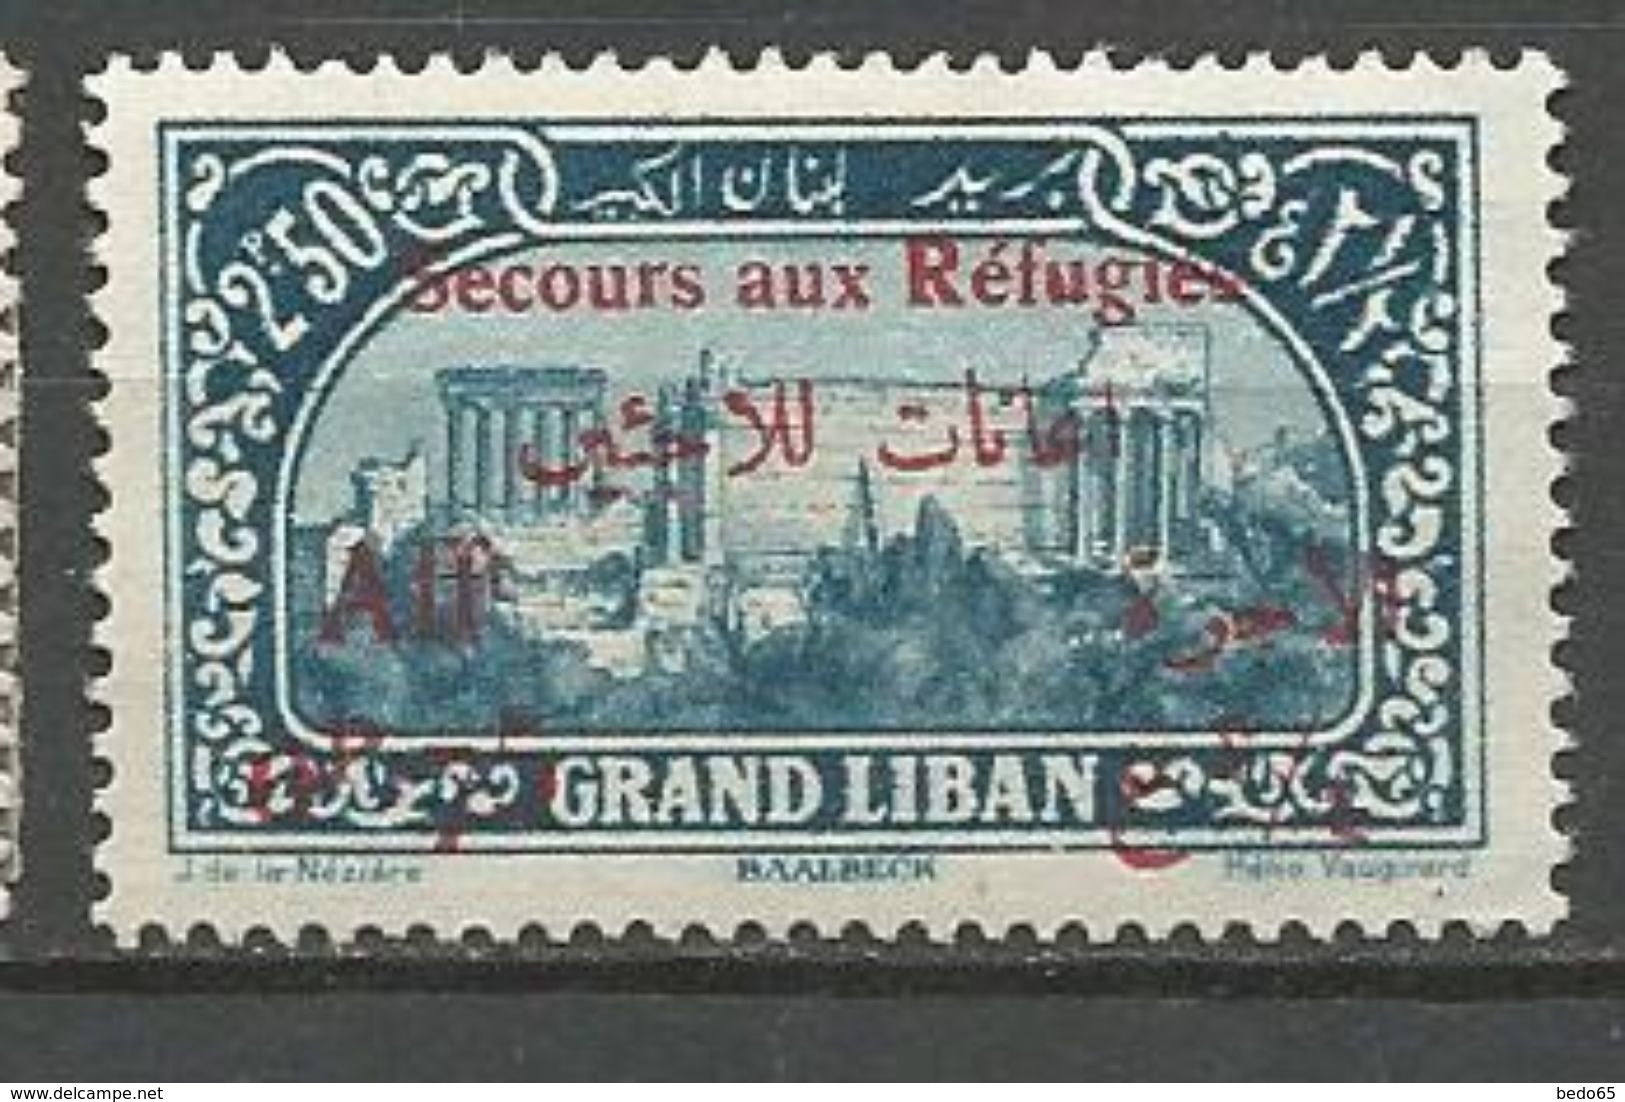 GRAND LIBAN N° 70 NEUF*  TRACE DE CHARNIERE MANQUE DE GOM / MH - Neufs